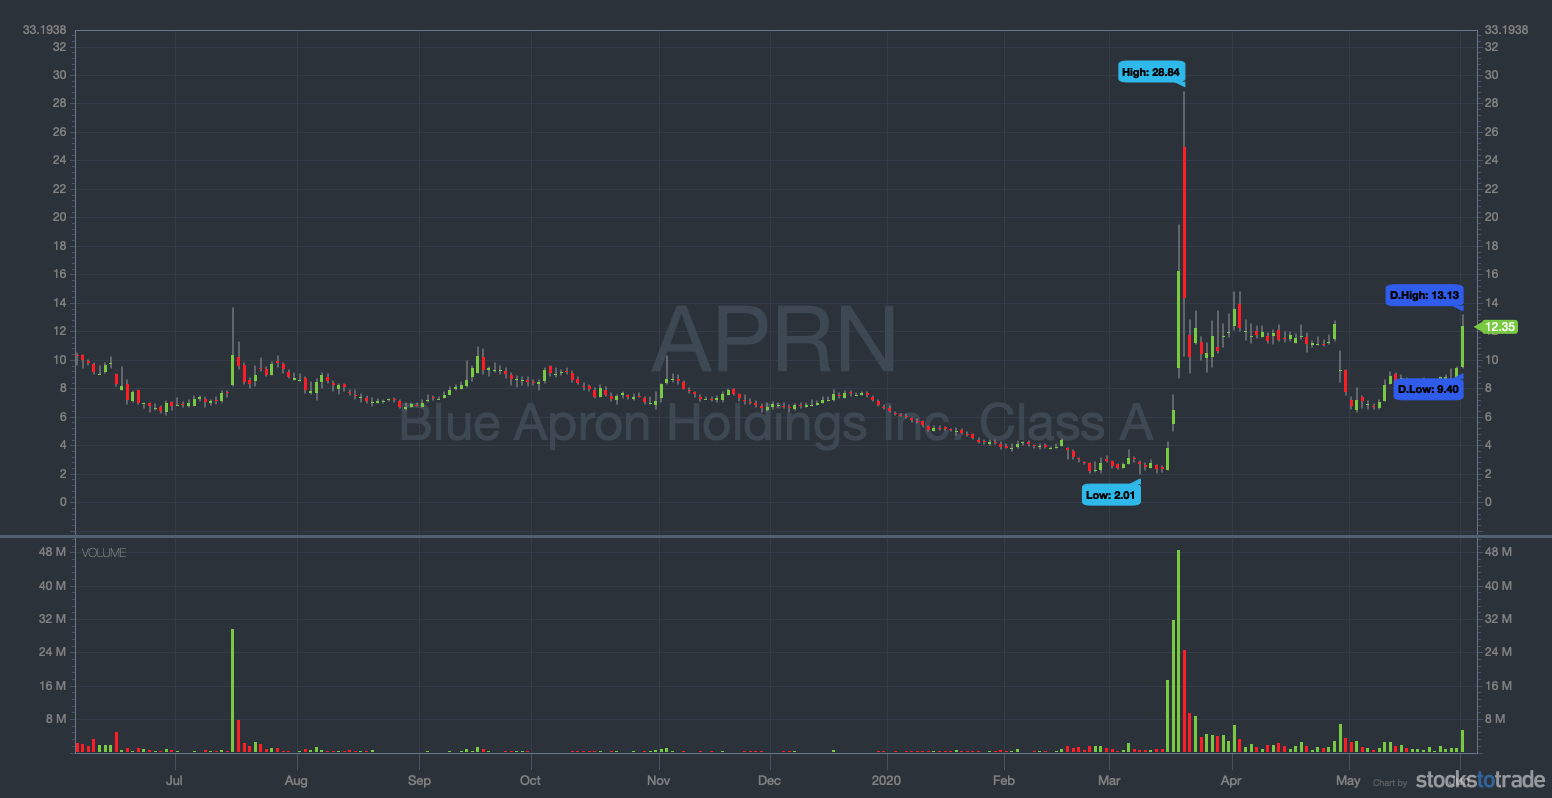 pandemic swing trades APRN 6 month chart